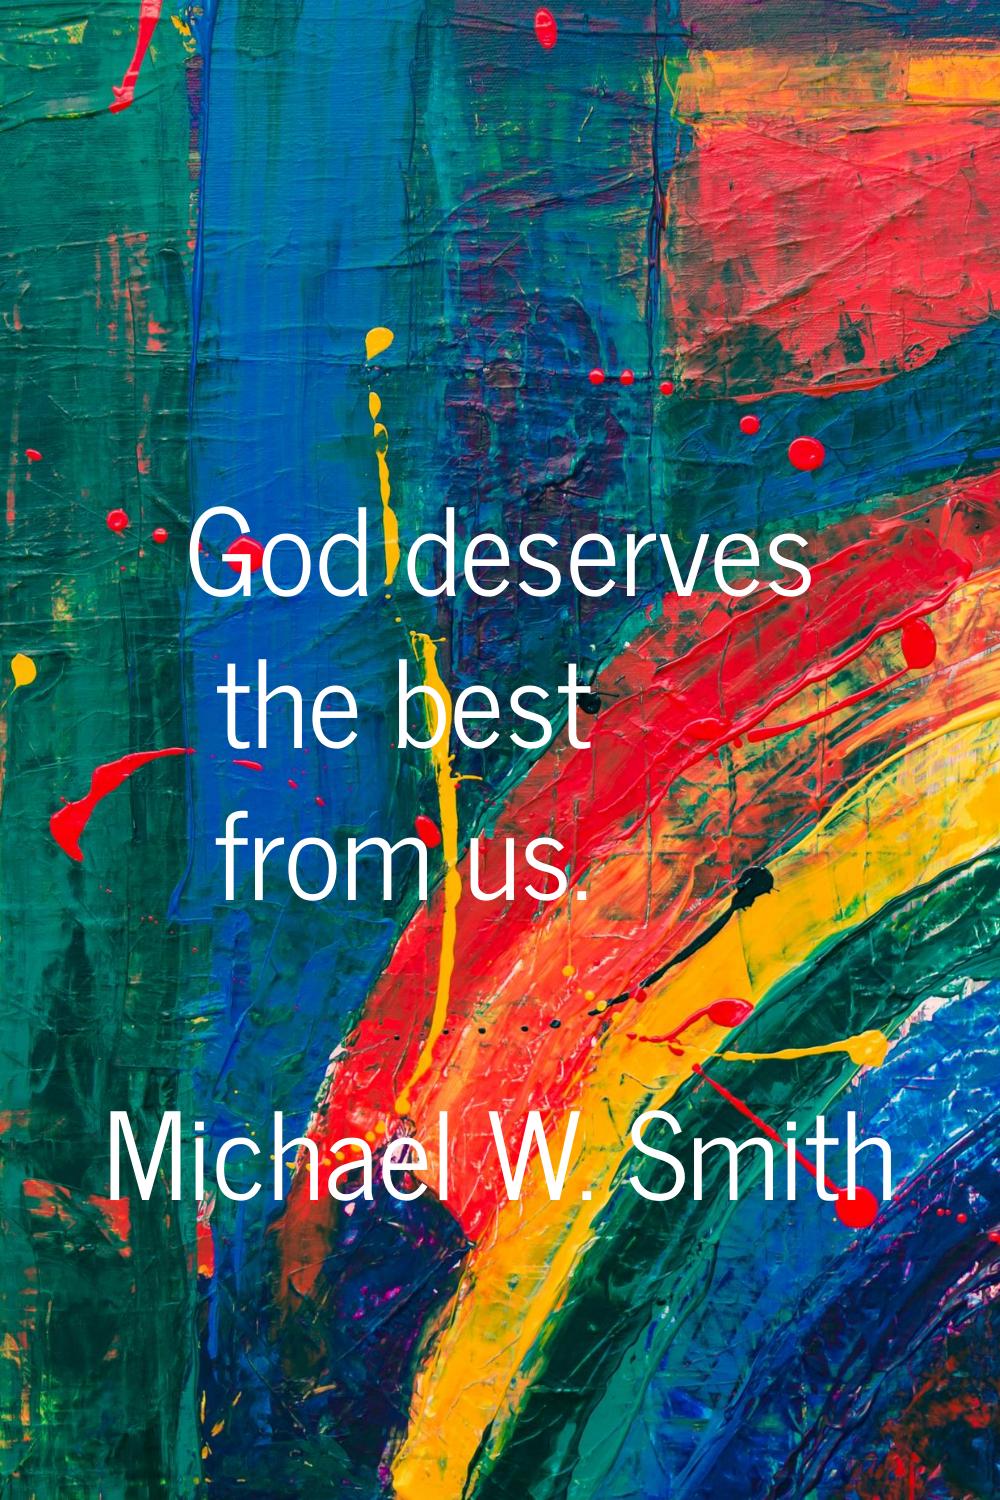 God deserves the best from us.